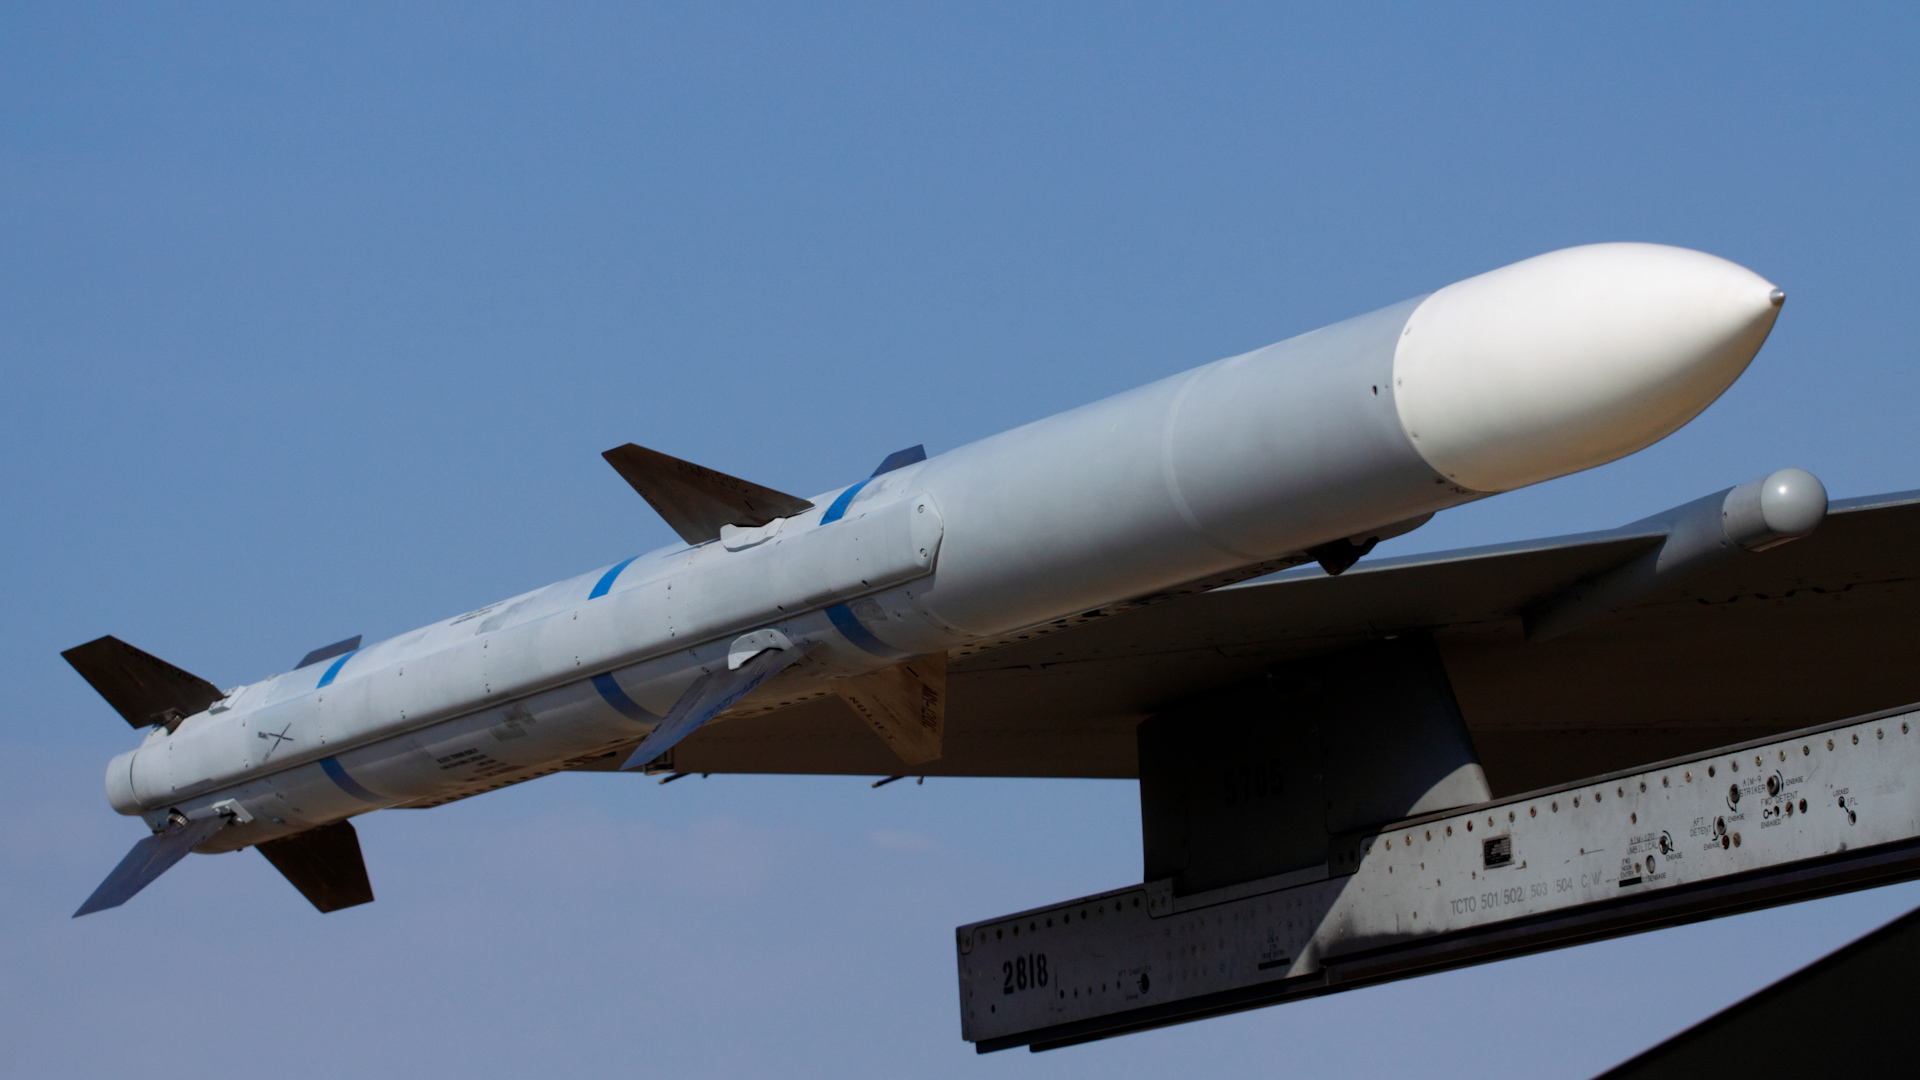 La Svezia venderà missili aria-aria Rb 99 (alias AMRAAM) agli Stati Uniti, che li daranno all'Ucraina.